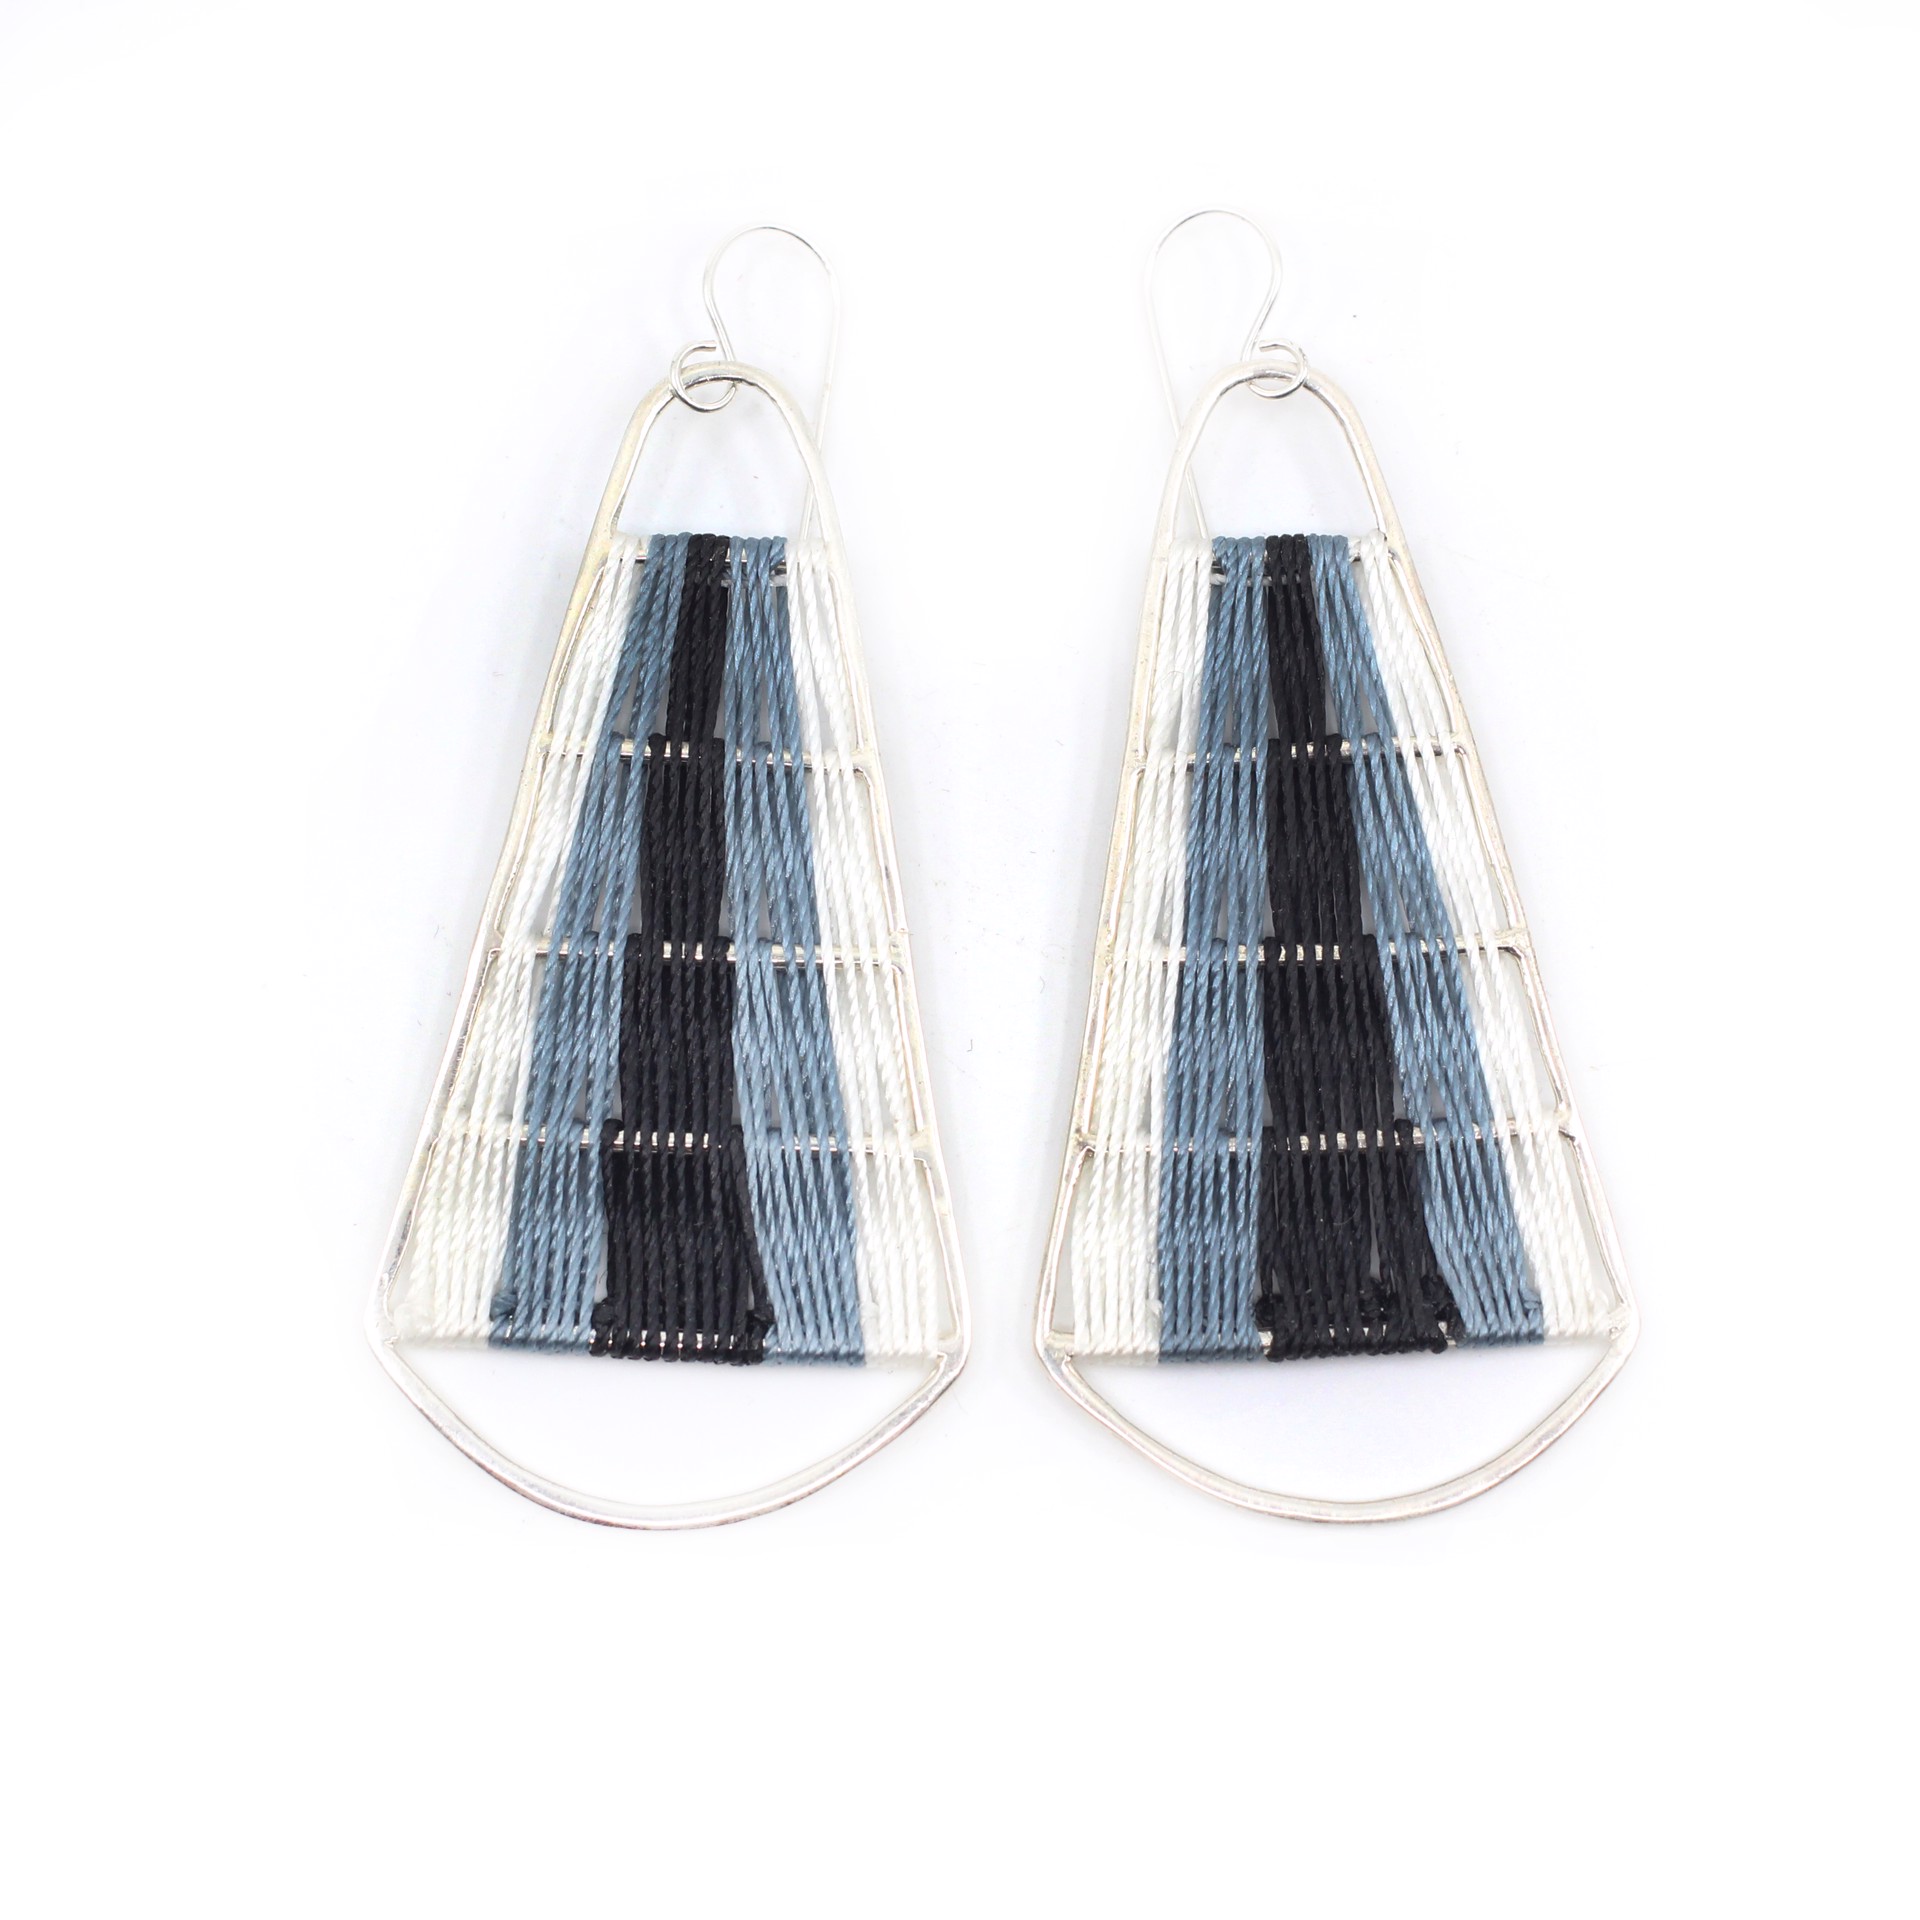 Horizon Earrings (Black, Blue, & White) by Flag Mountain Jewelry